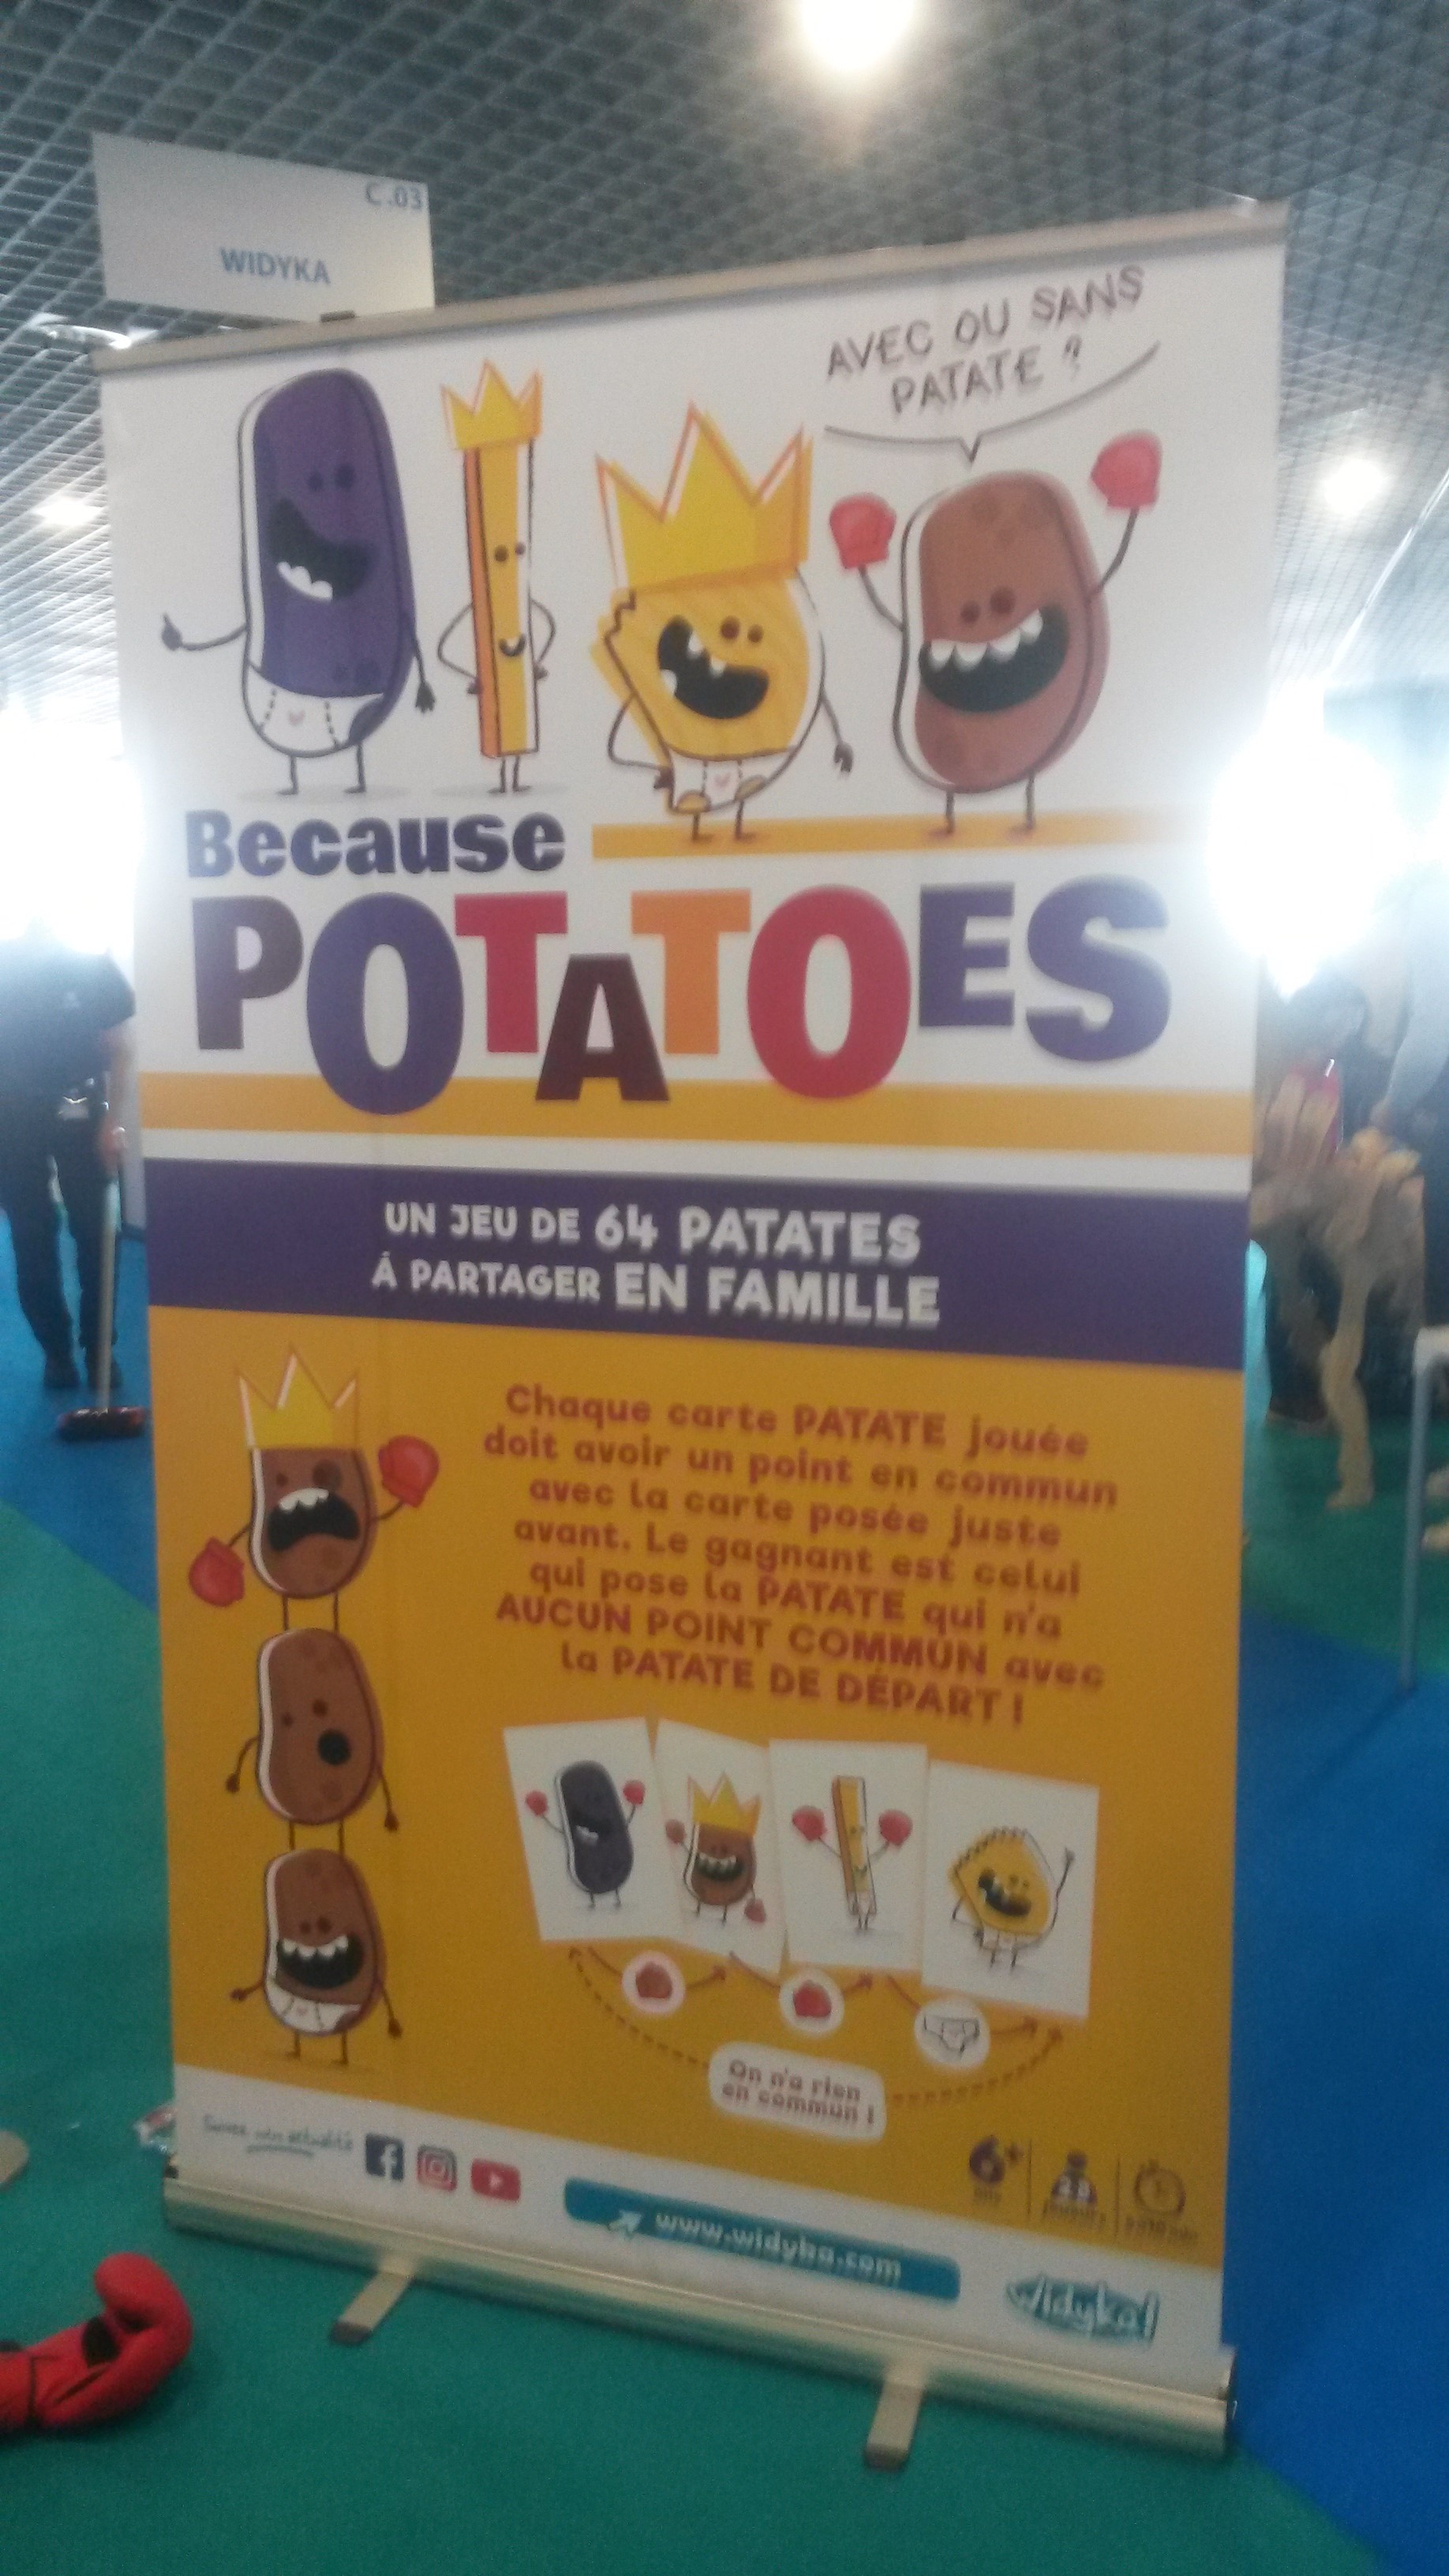 Because Potatoes